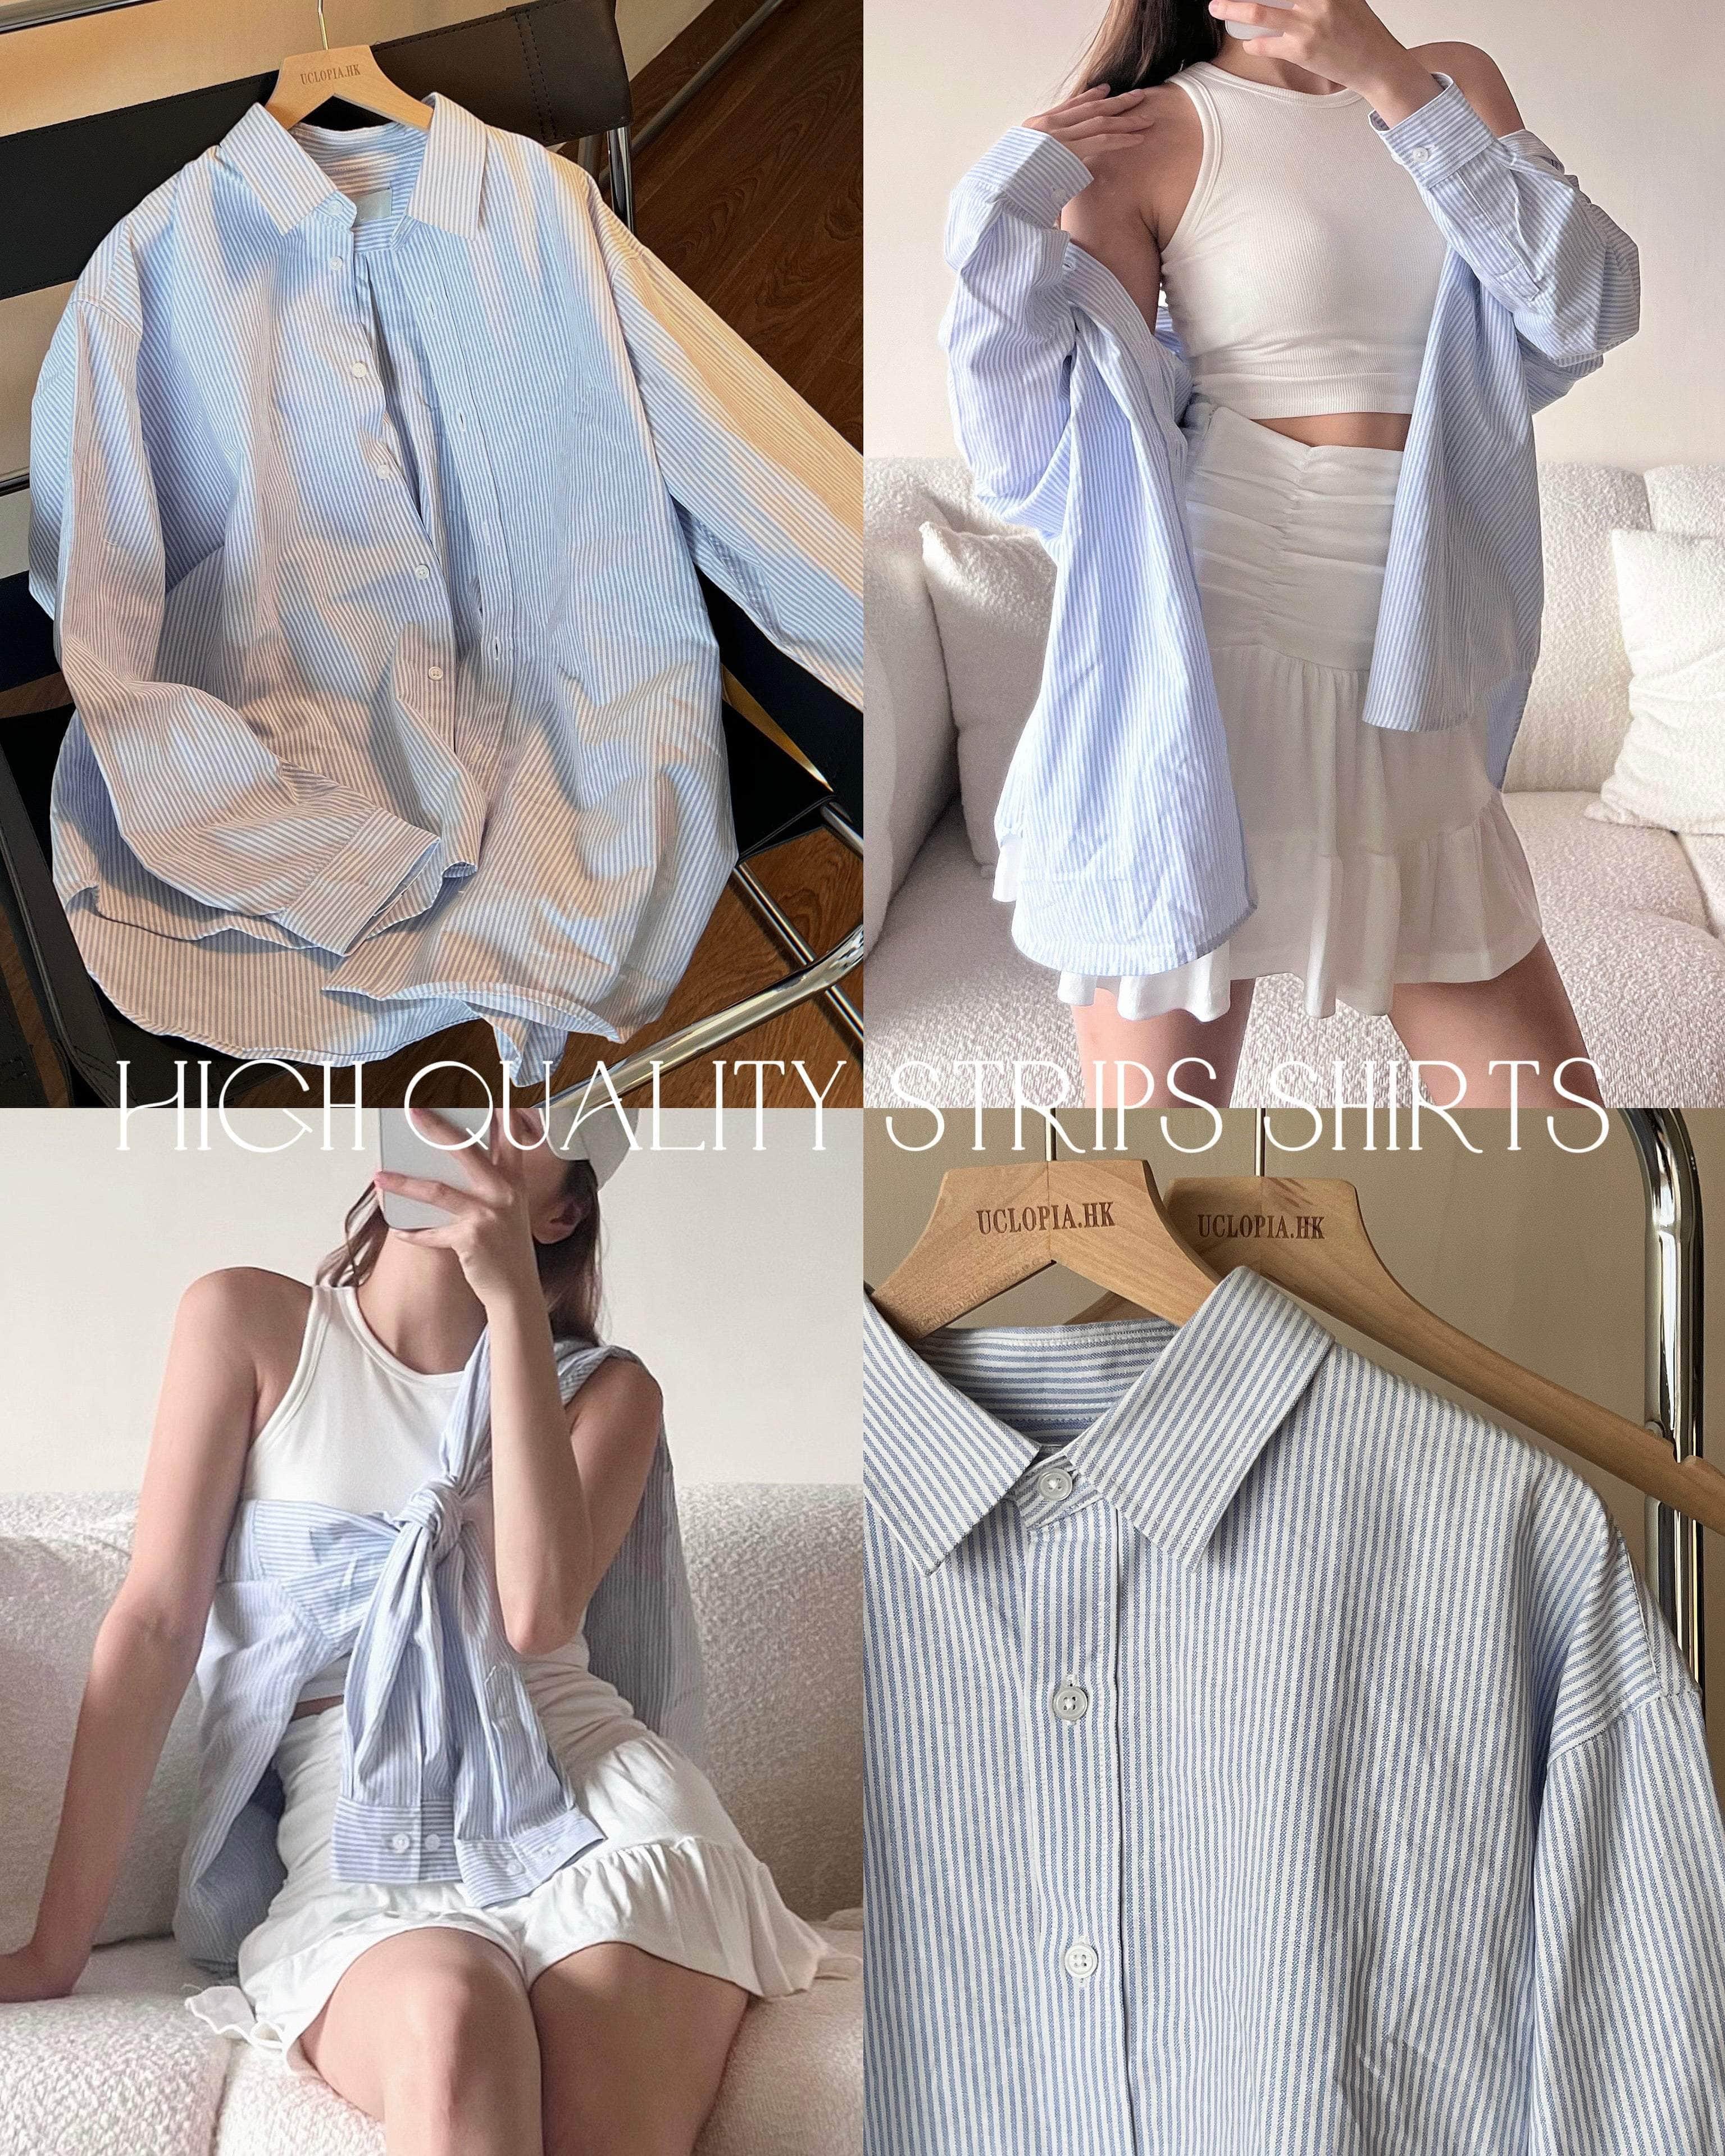 UCLOPIA HK 【🌗SEP 2】真係超高質必備藍白間條襯衫 High Quality Strips Shirts